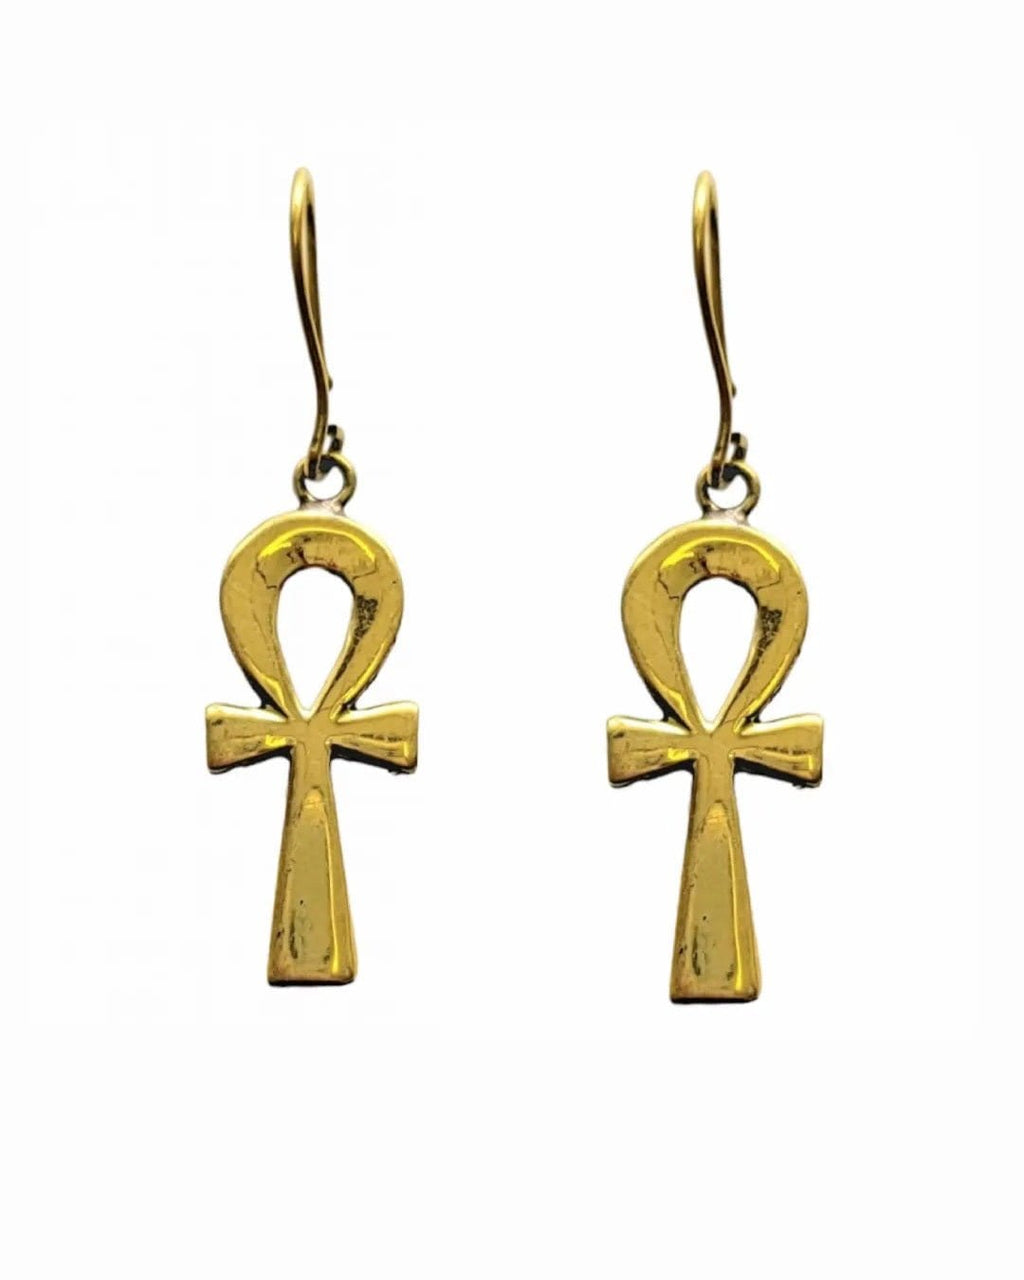 MINU Jewels Earrings Large - 1.25 inches / Gold Ankh "Key Of Life" Earrings